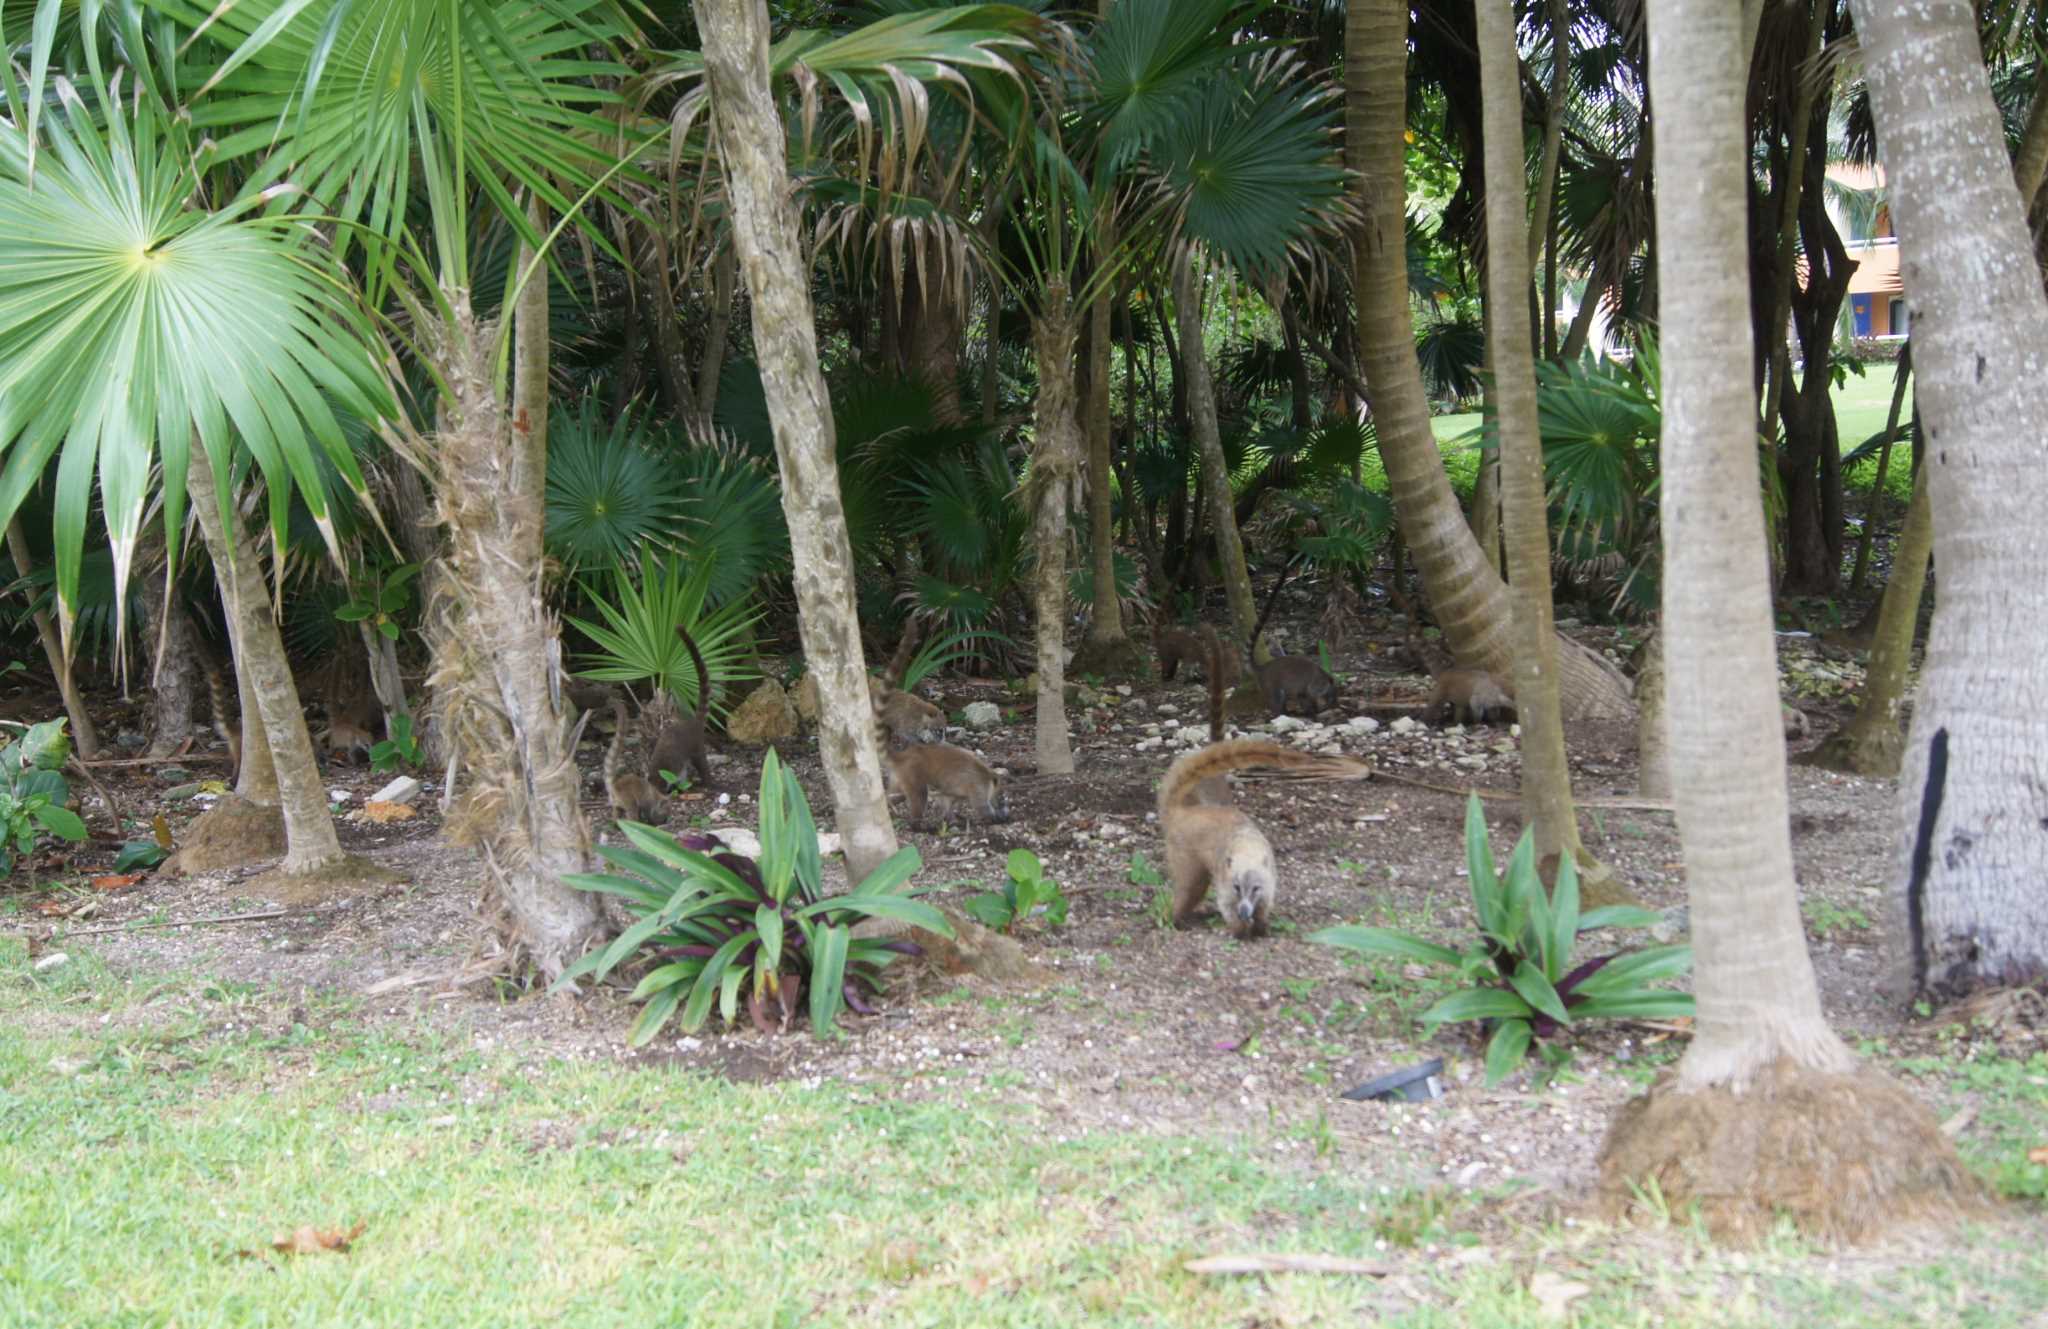 Канкун - Бахия принцип - Коати (смесь барсука и лемура) - Bahia principe - A Coati(like a blend of a badger & a lemur)